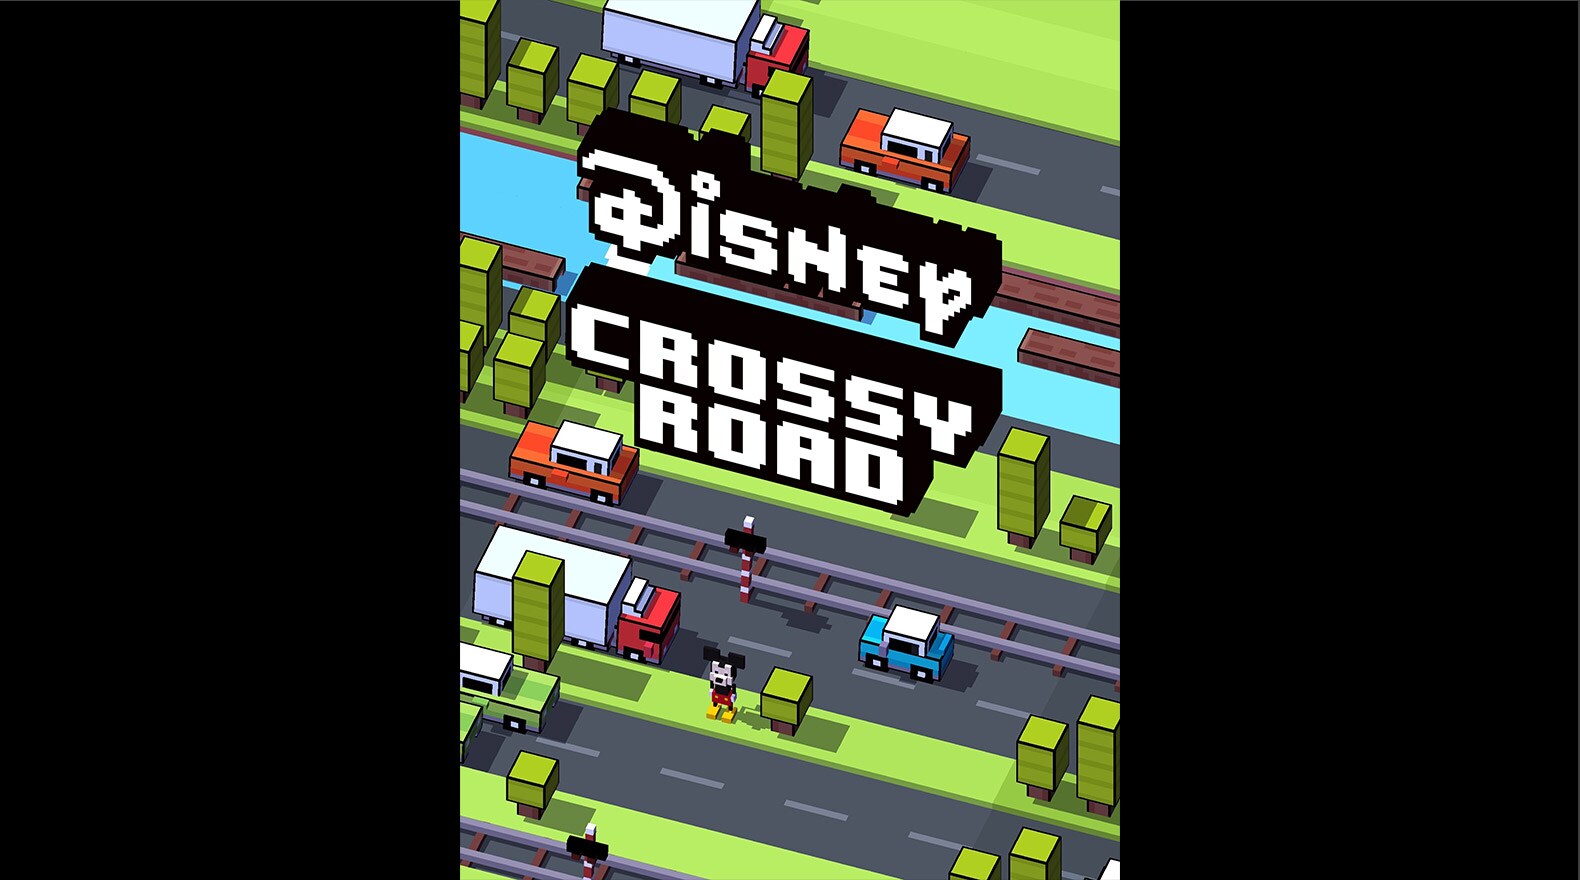 disney crossy road broken